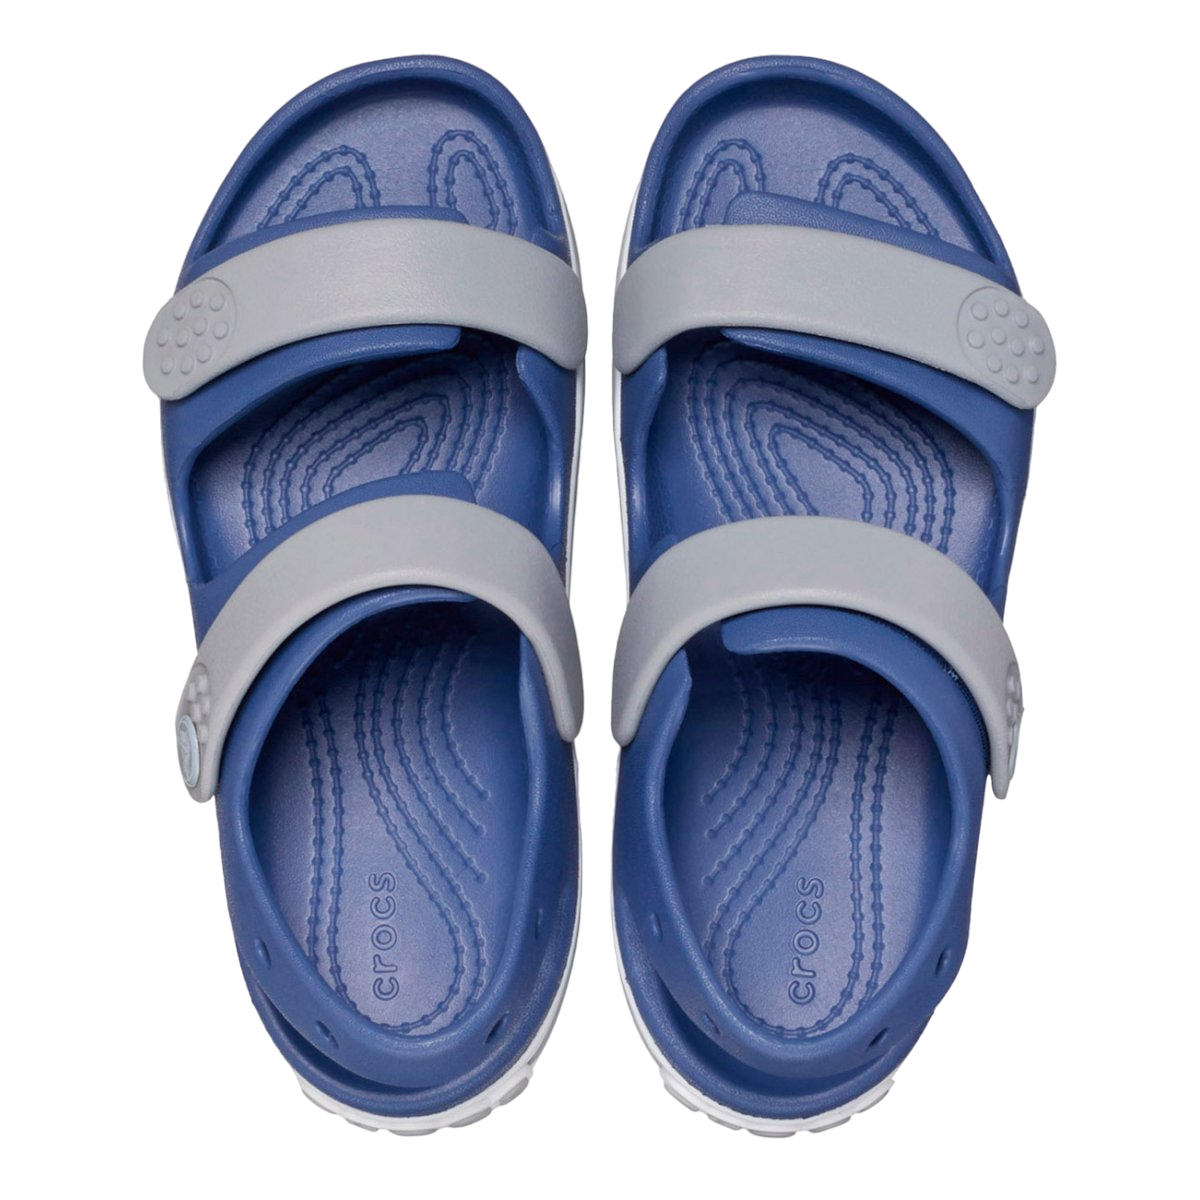 Crocs sandalo da bambino Crocband Cruiser 209423 45O blu-grigio